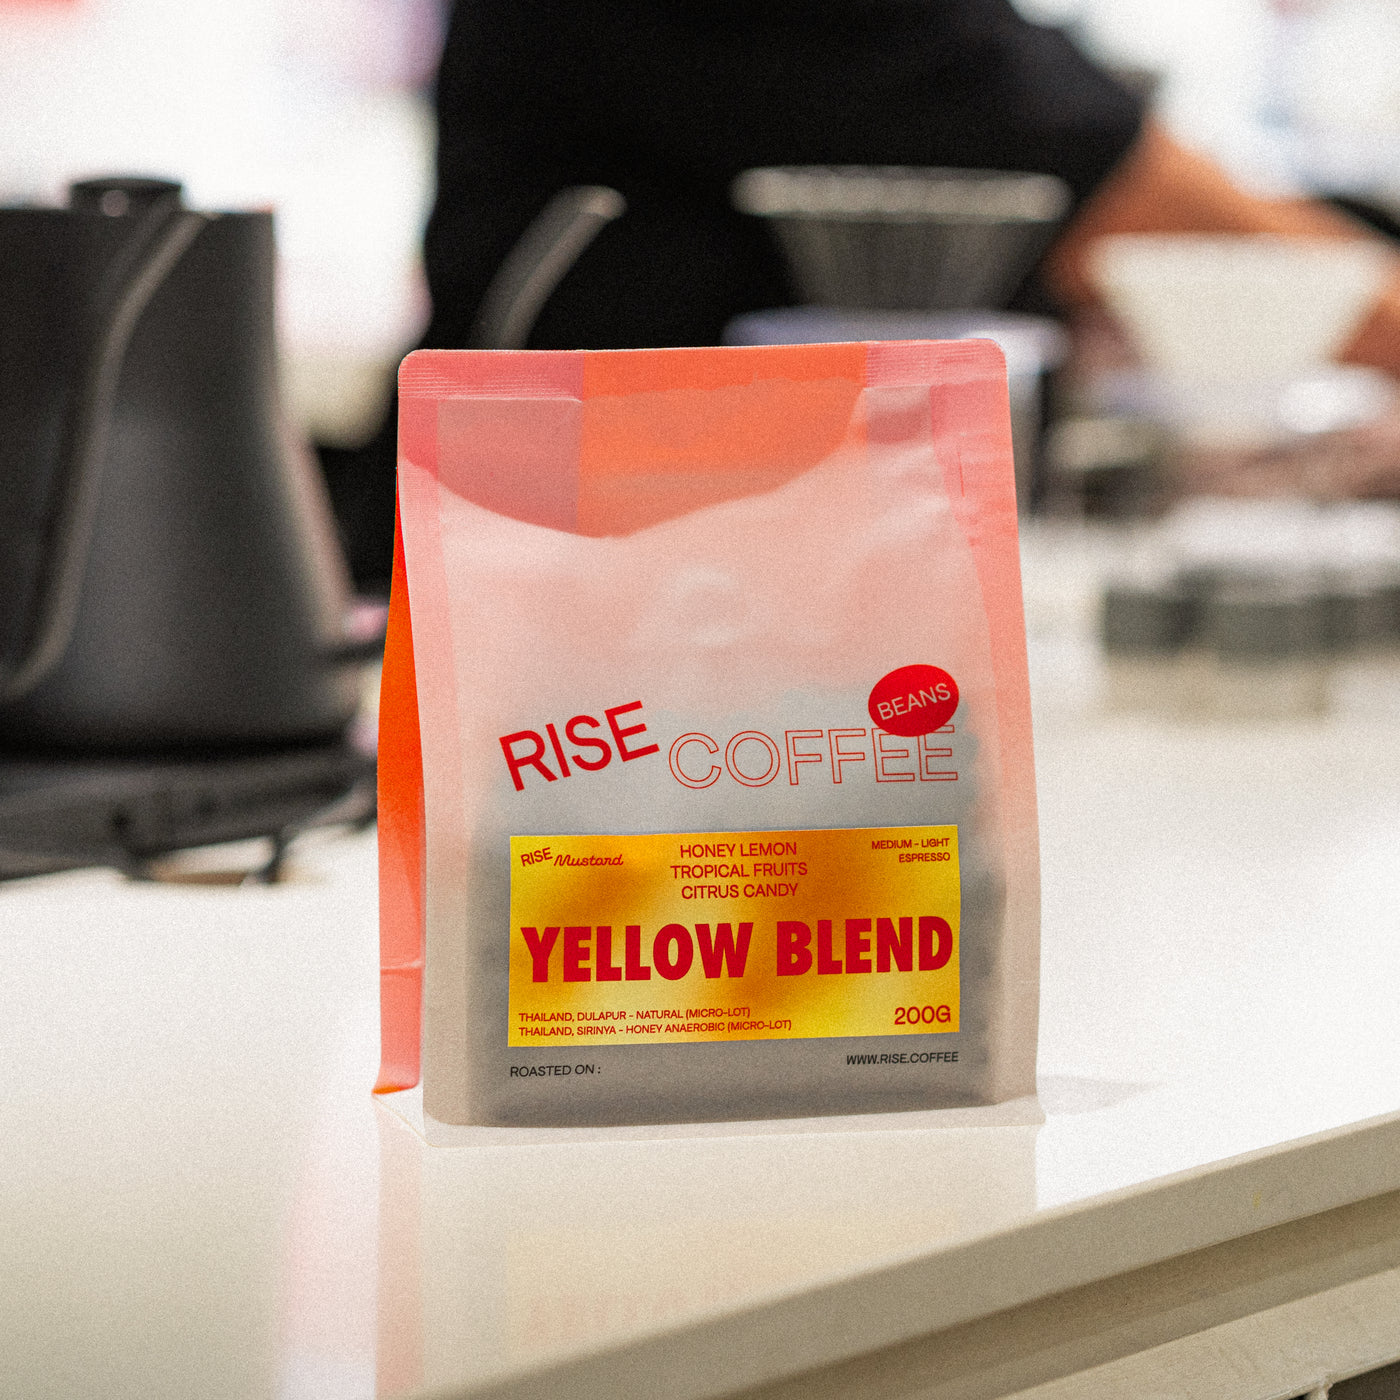 RISE COFFEE x Mustard - Yellow Blend (Micro-Lot)